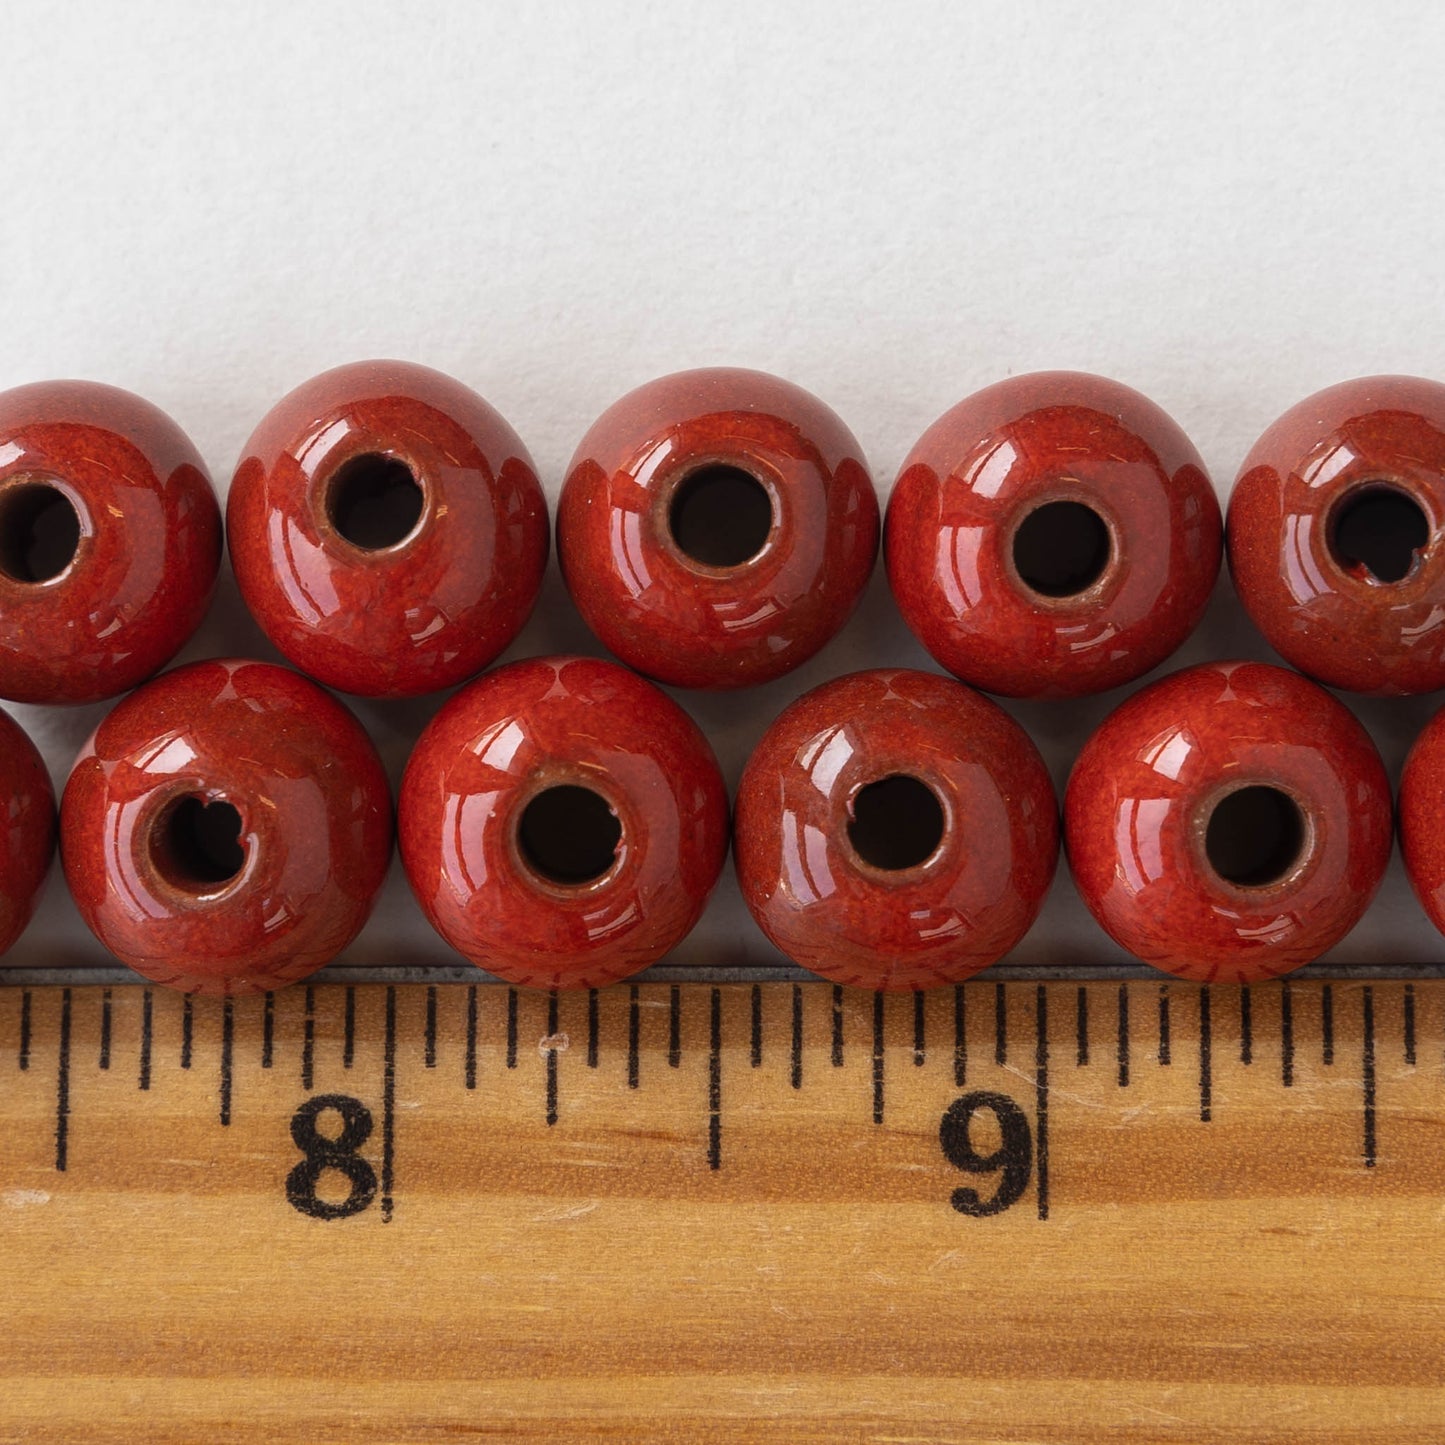 13mm Glazed CeramicRound Beads - Opaque Crimson Red - 6 or 18